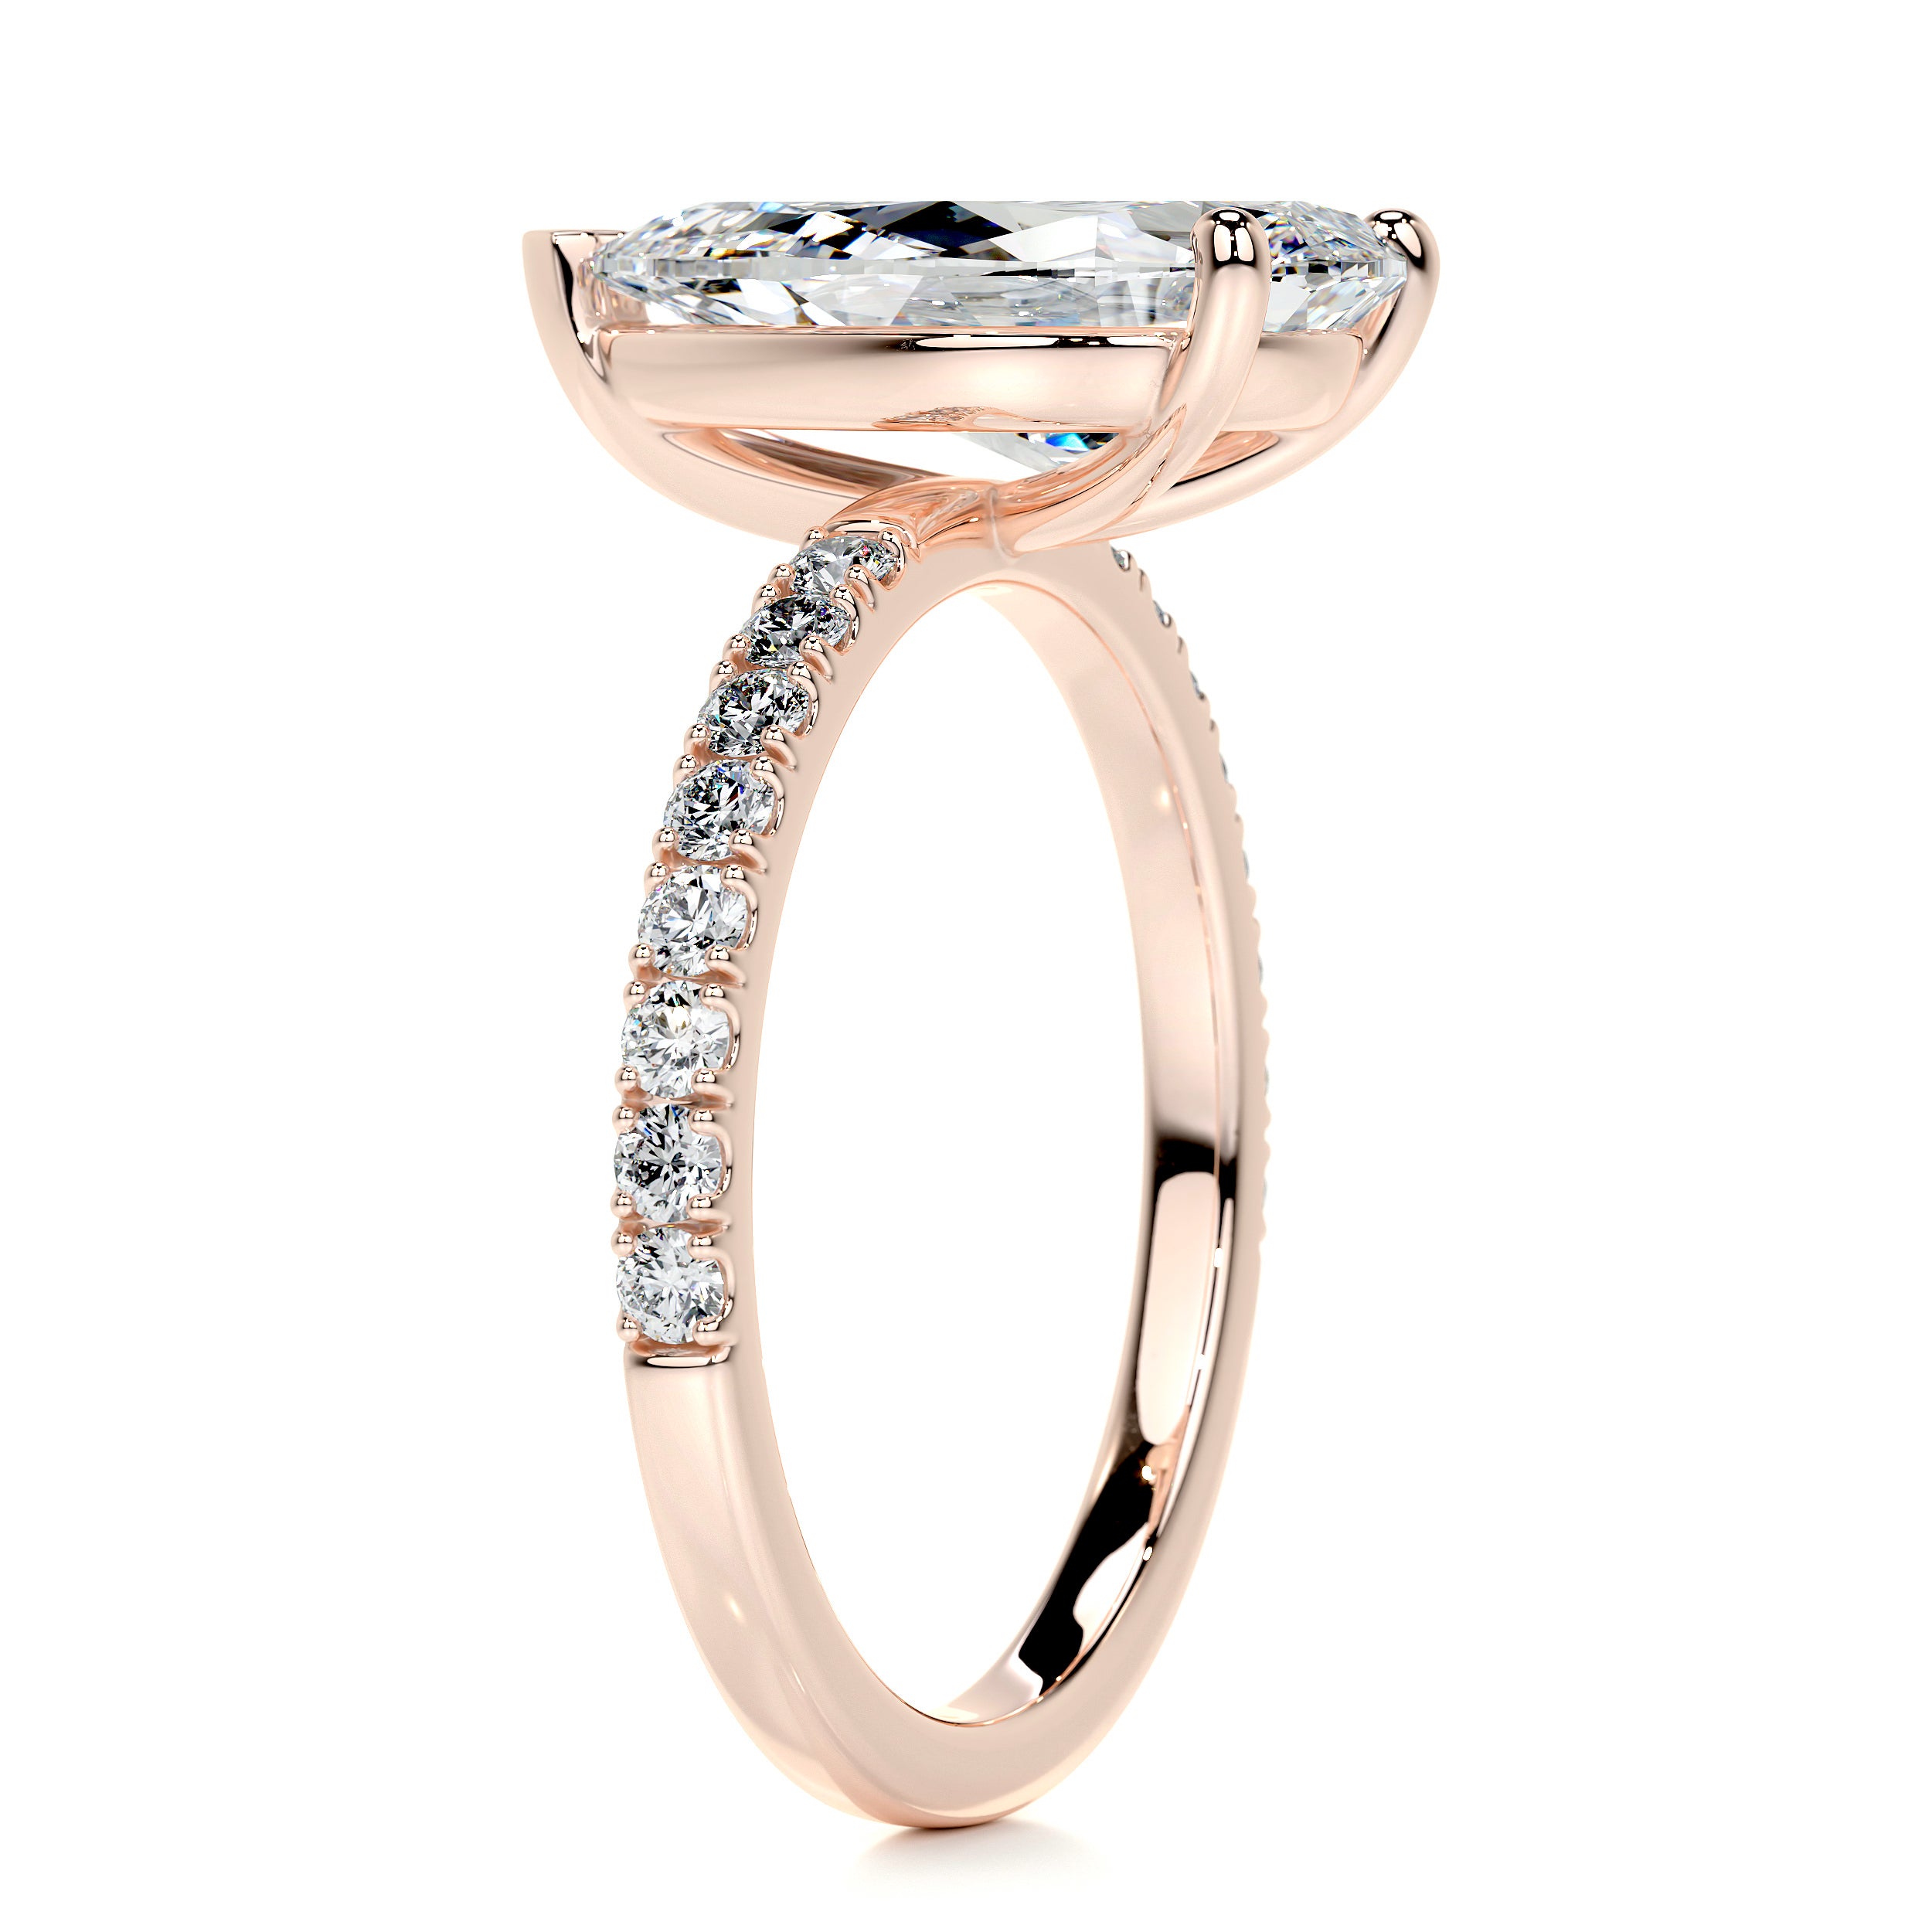 Jenny Diamond Engagement Ring   (5.5 Carat) -14K Rose Gold